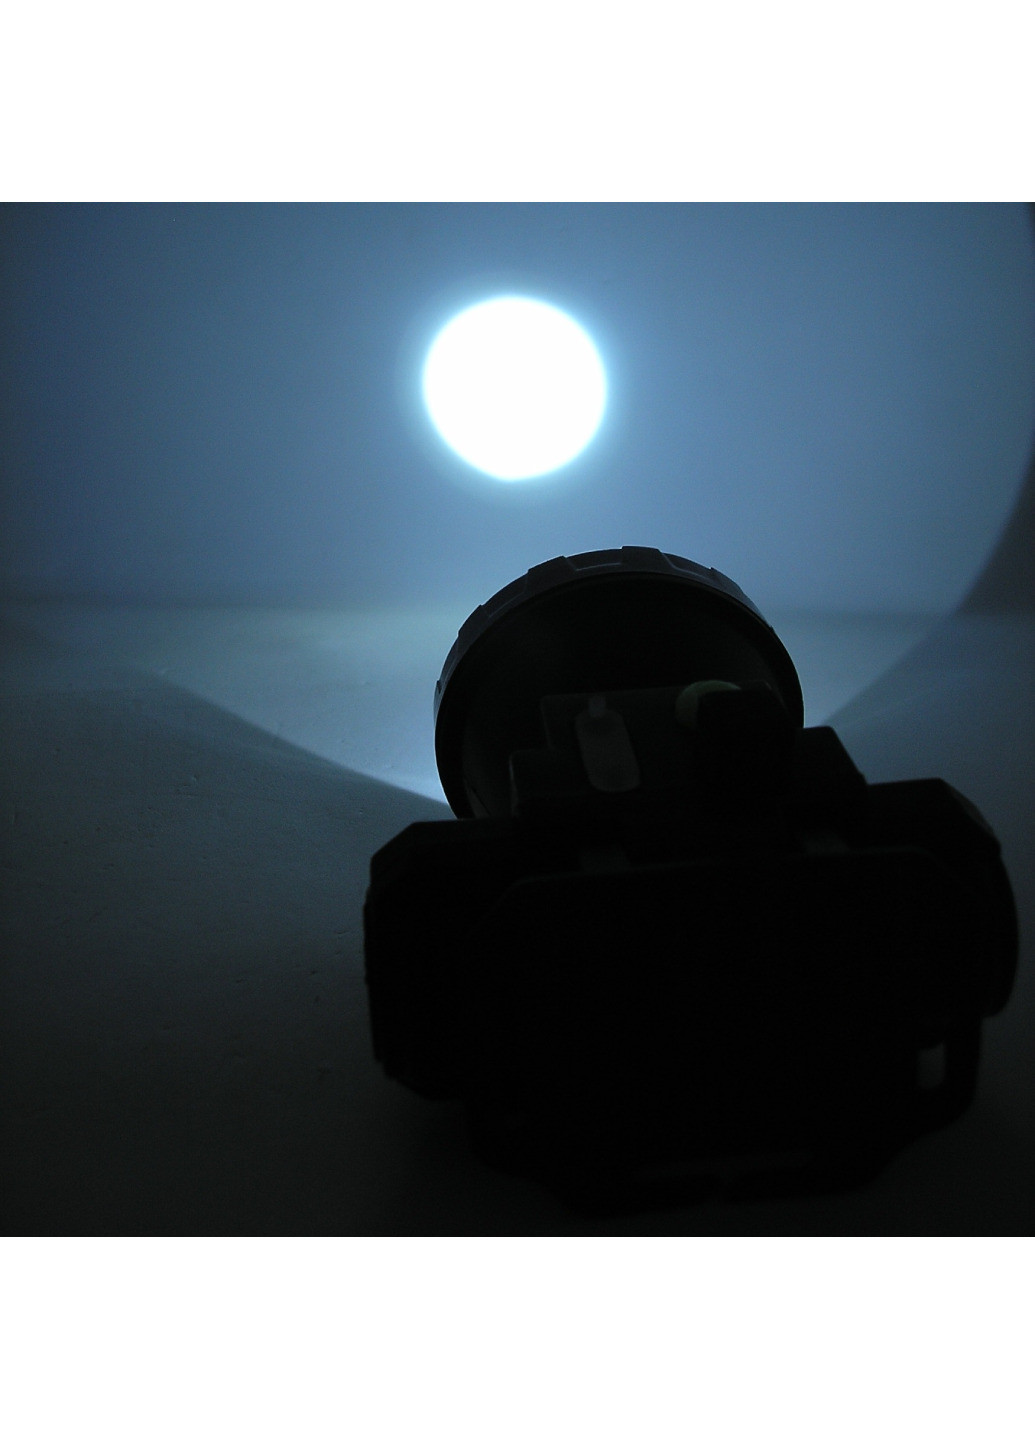 Фонарик на аккумуляторе USB ЮСБ 600 mAh фонарь мощный налобный на голову рефлектор 46 мм 3 режима YH01 LED XO (260661291)